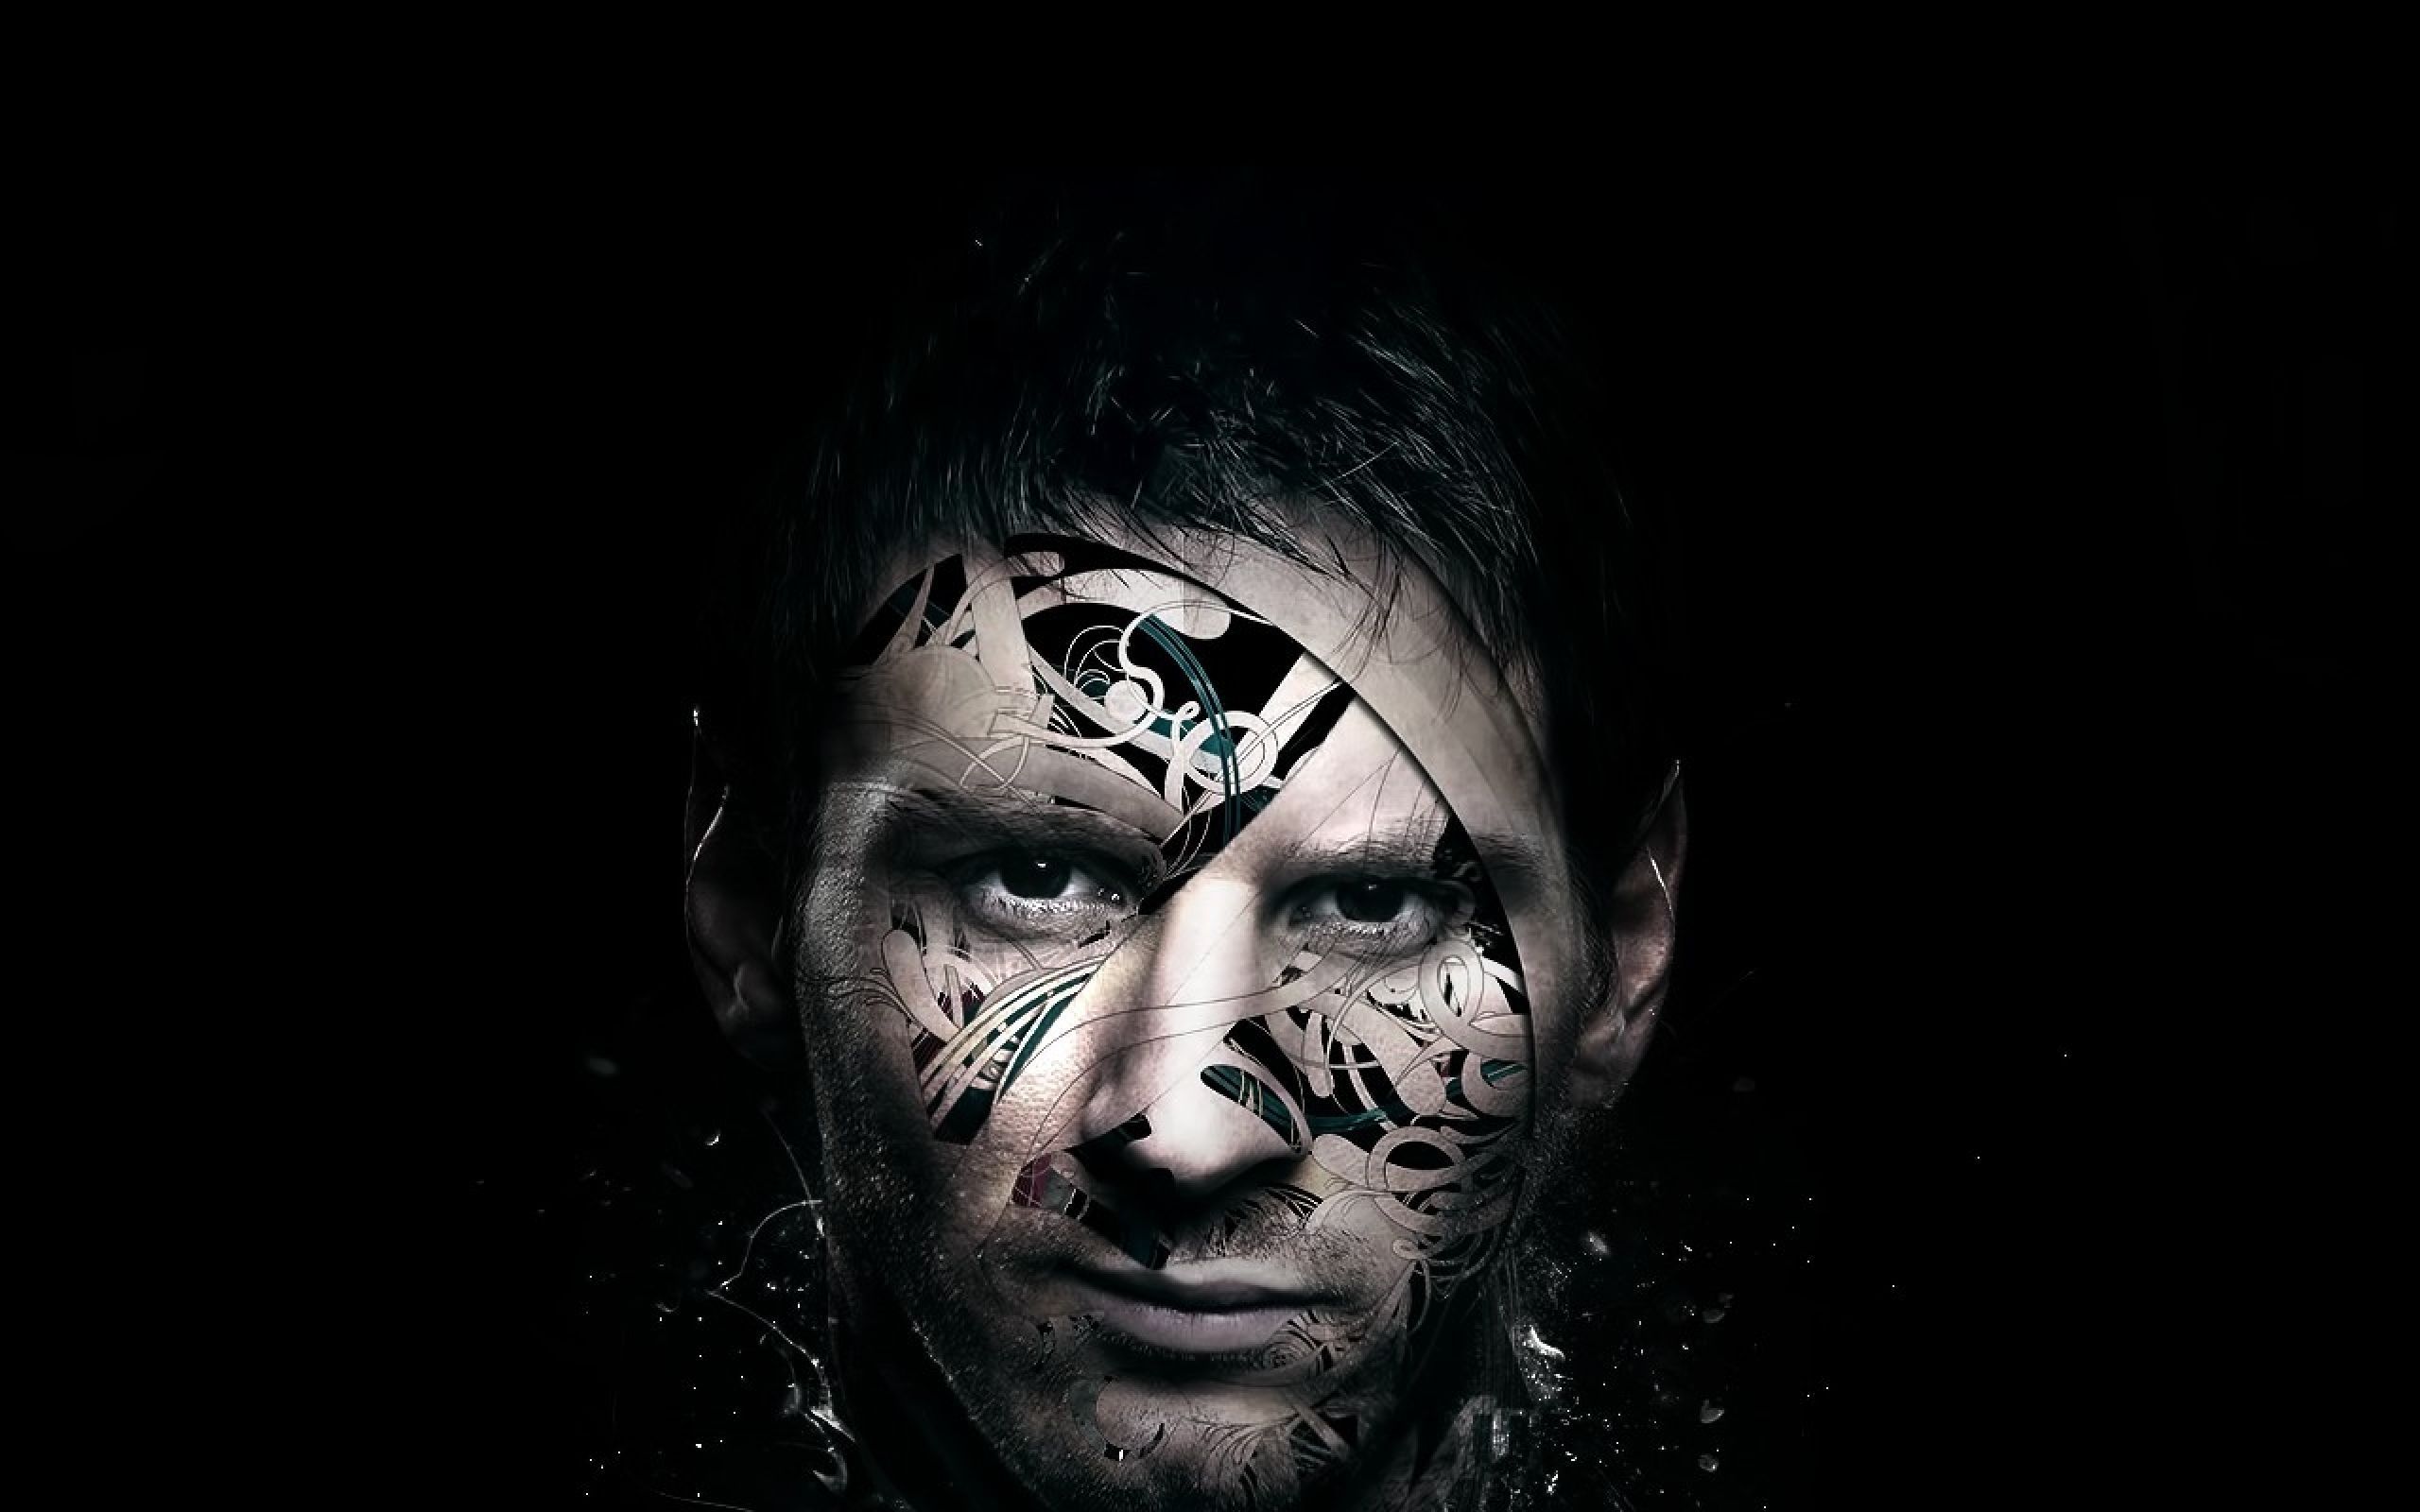 Lionel Messi HD Wallpaper